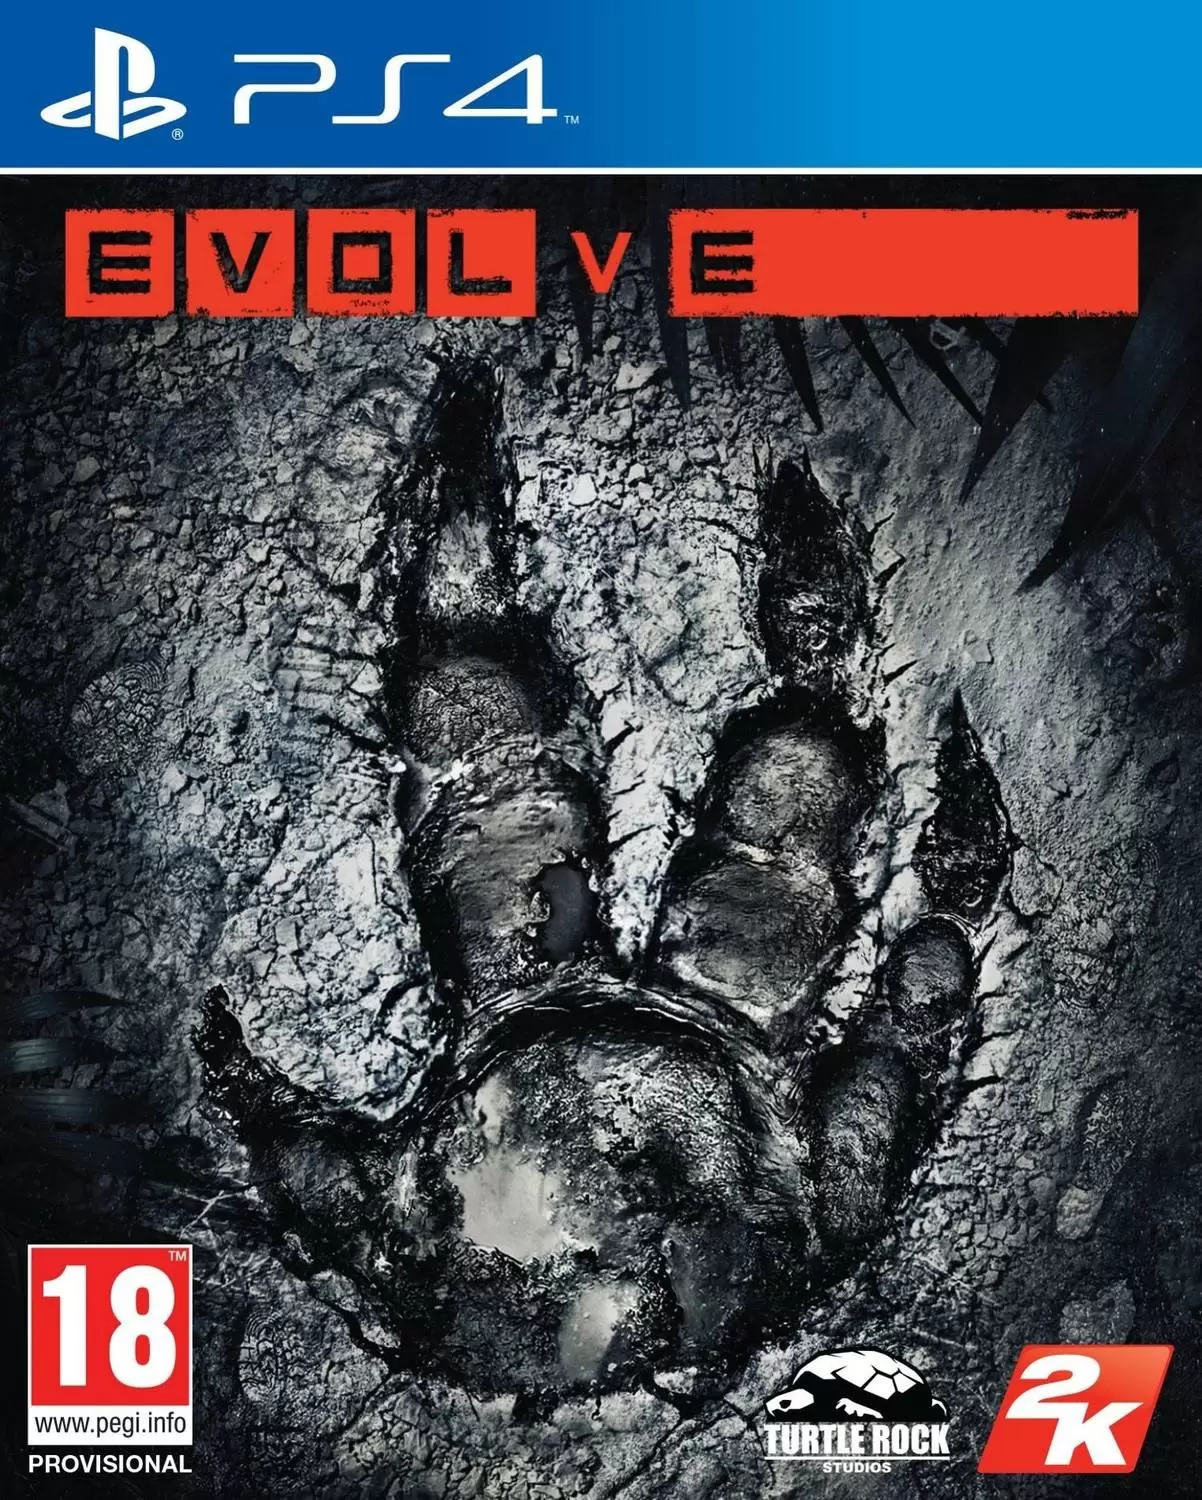 PS4 Games - Evolve